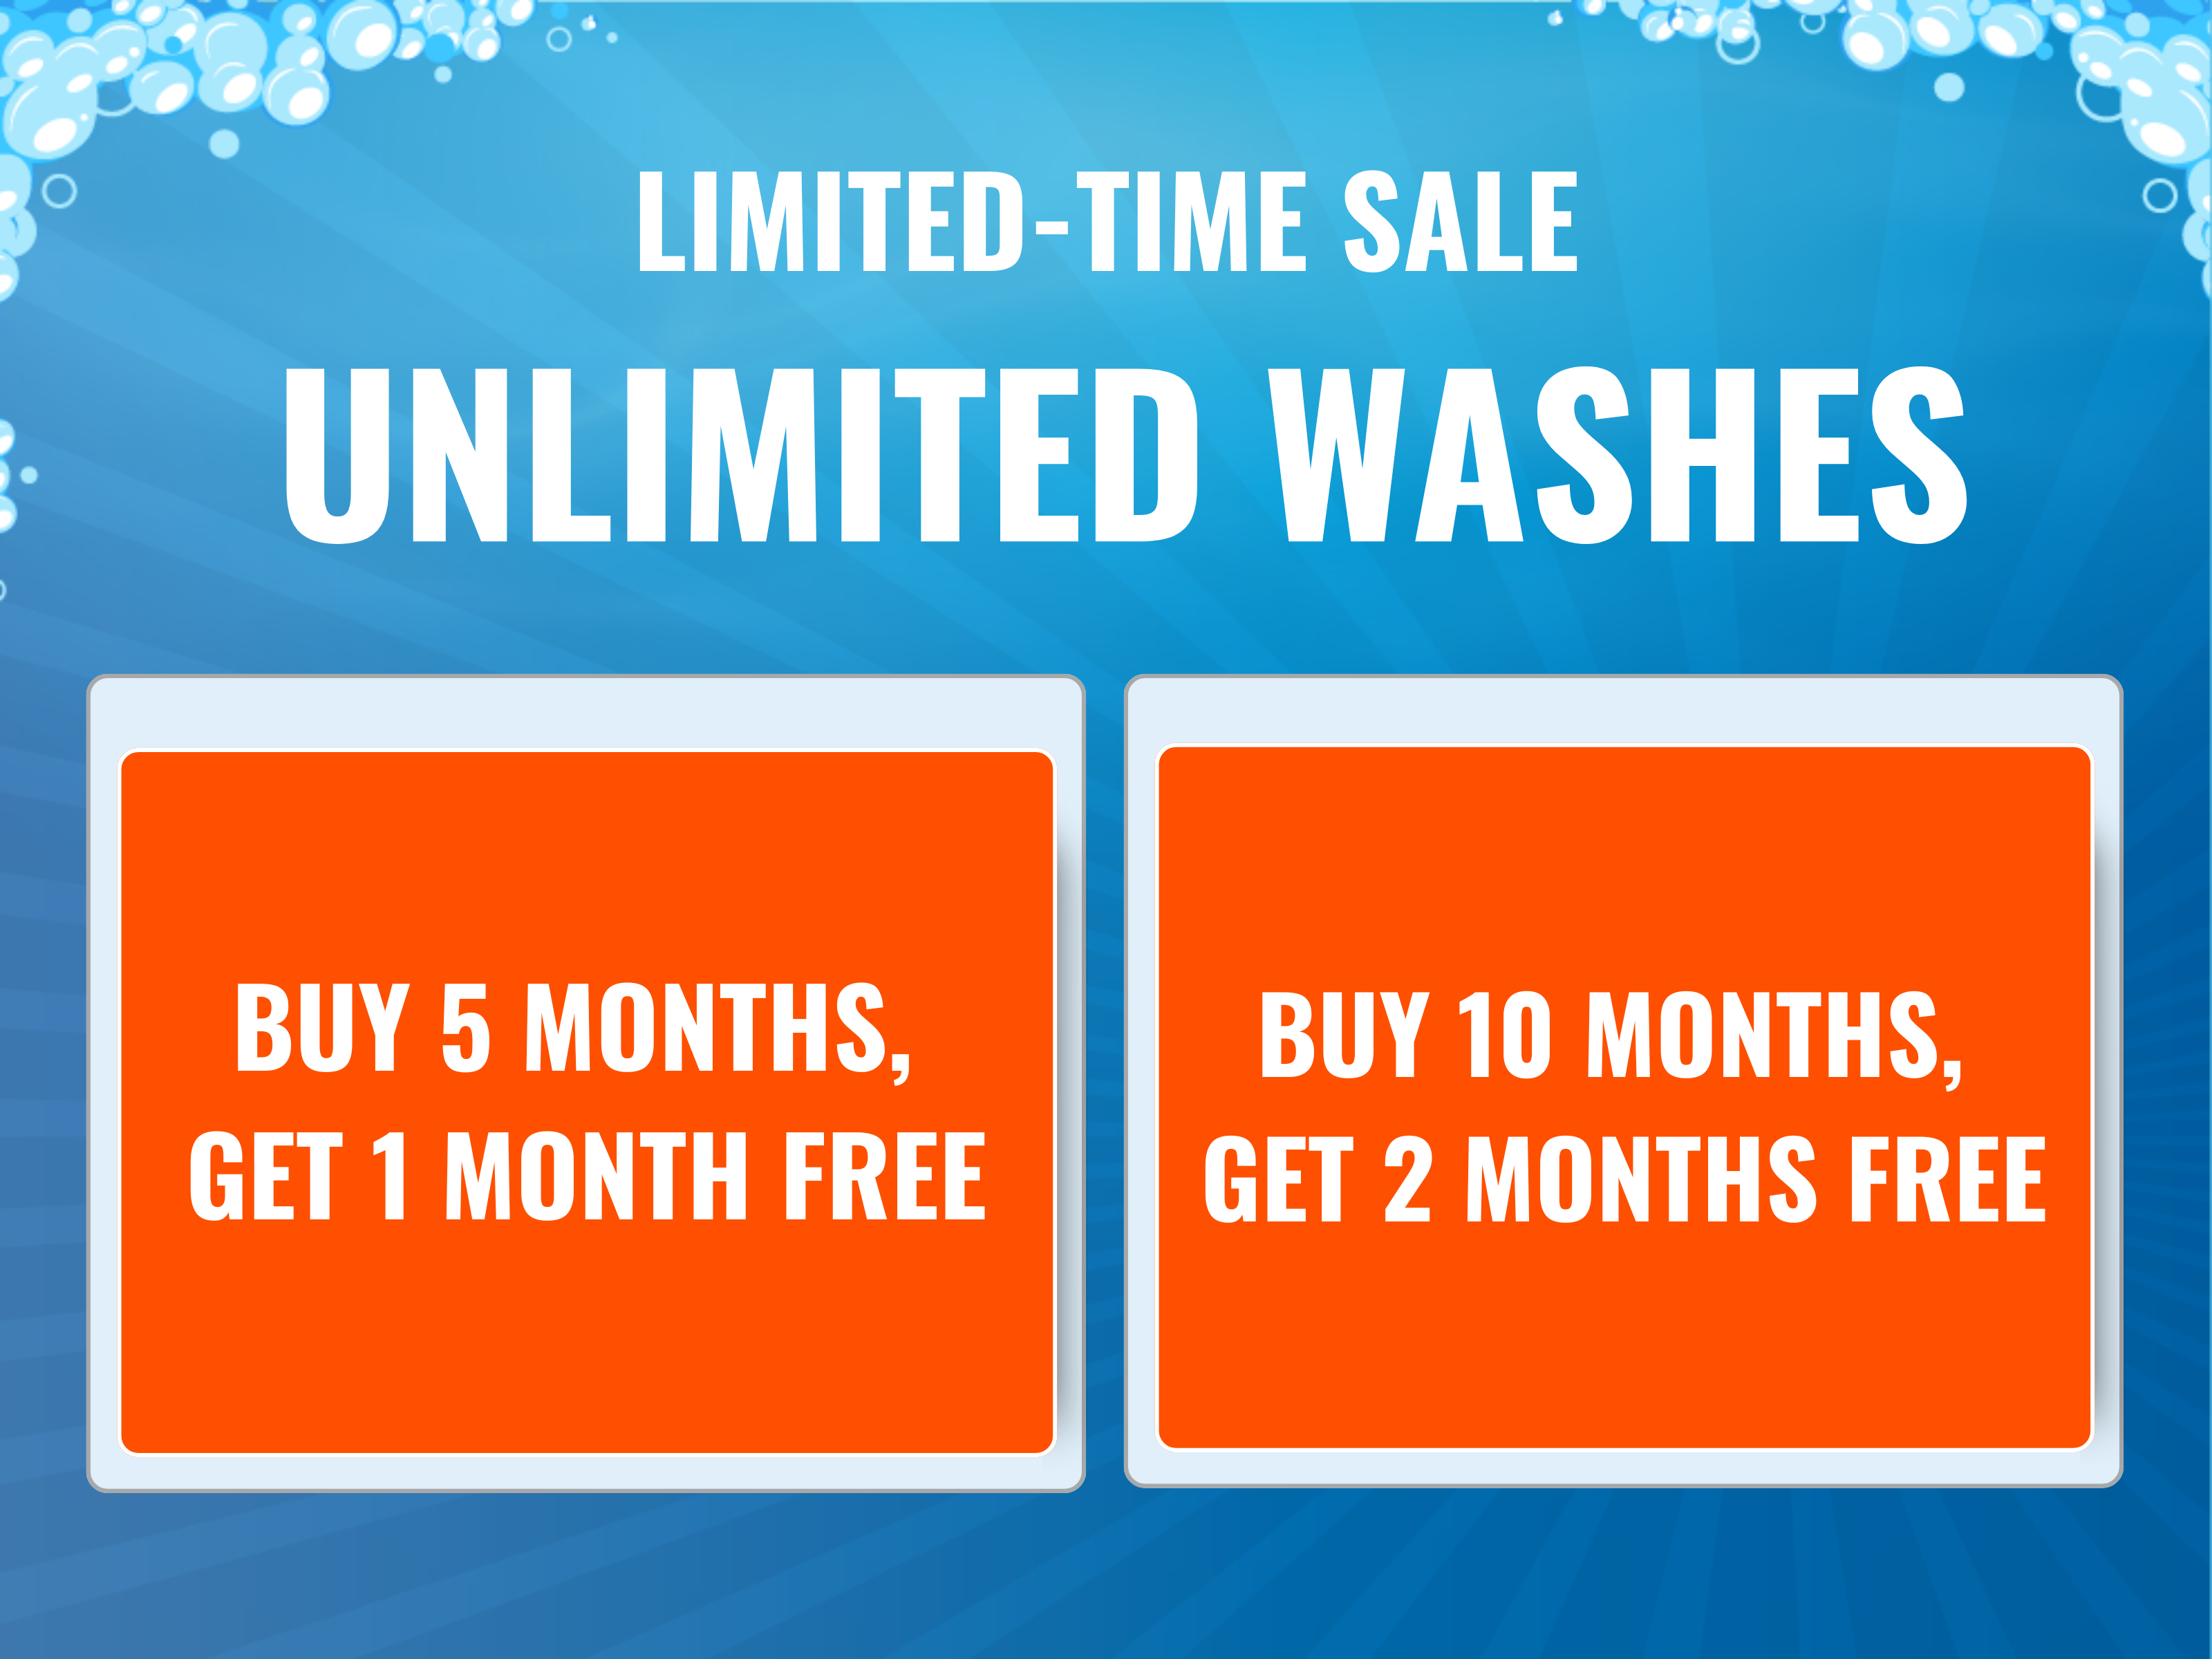 6 & 12 month unlimited wash plan sale